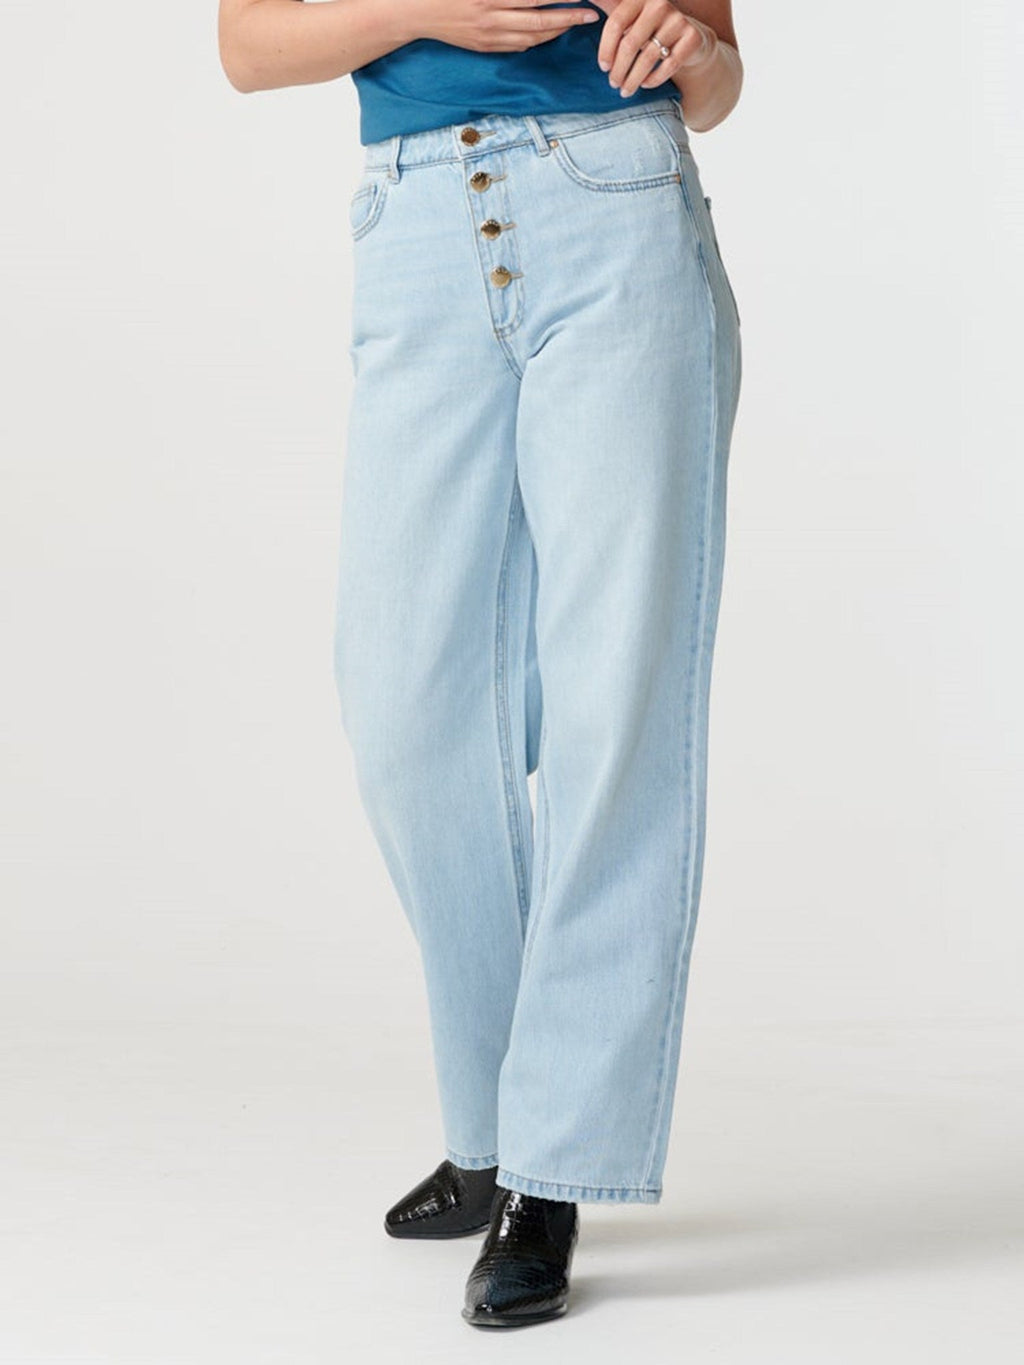 Jeans jugosos (pierna ancha) - azul claro azul